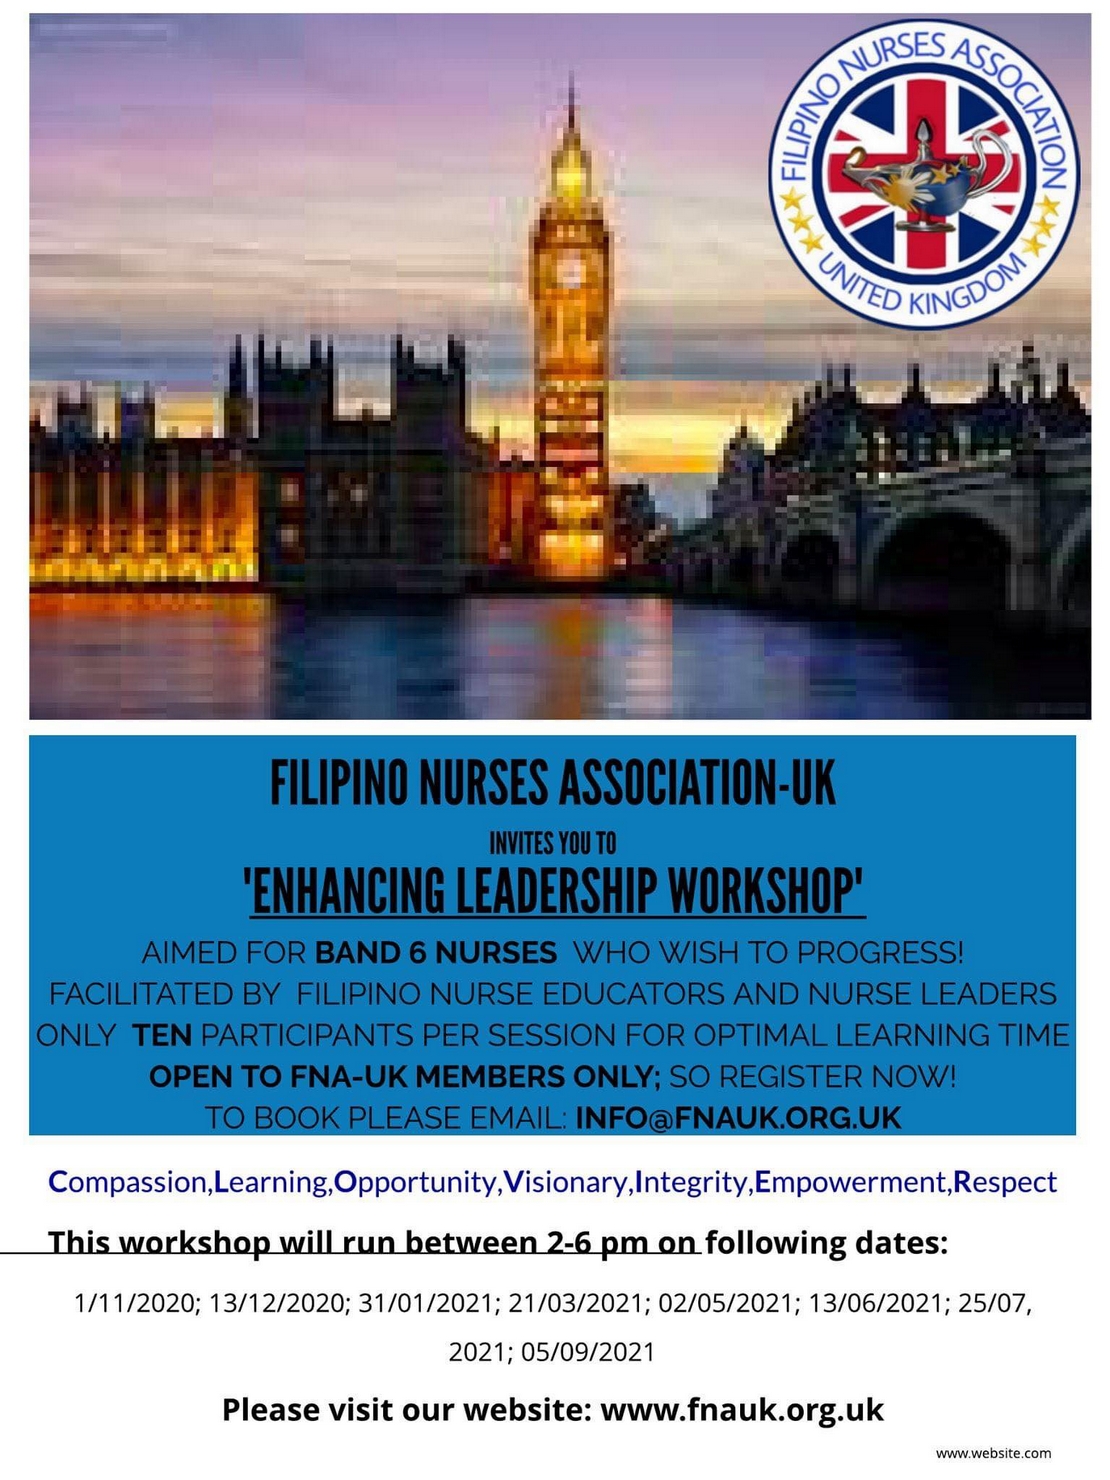 FNA_UK Enhancing Leadership Skills Workshop